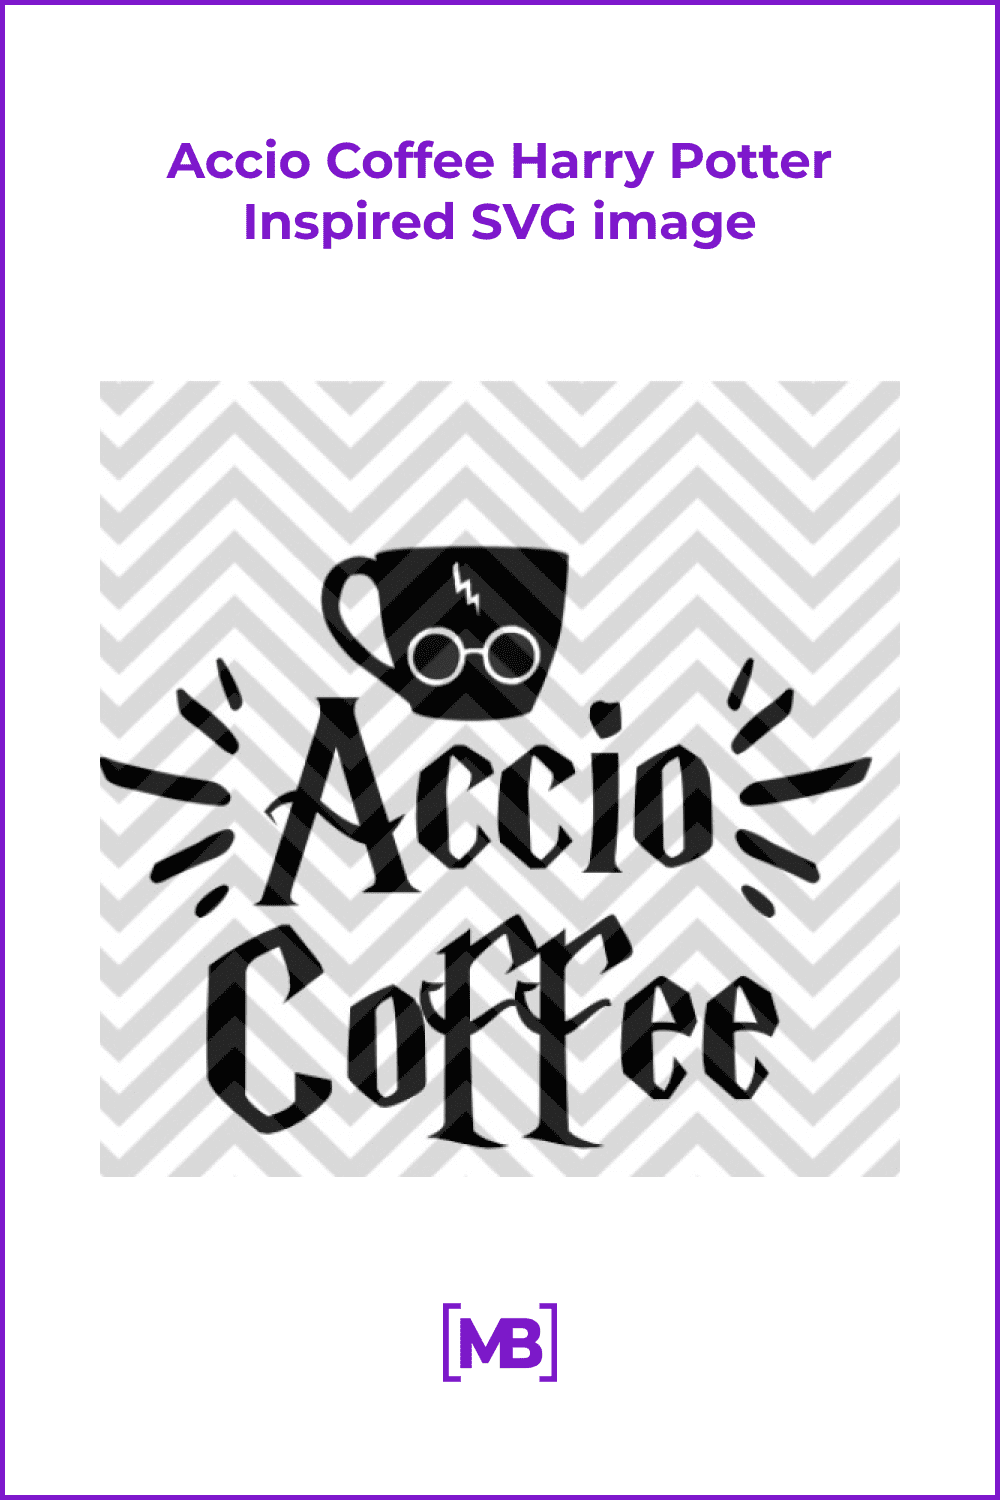 Accio coffee harry potter inspired SVG image.